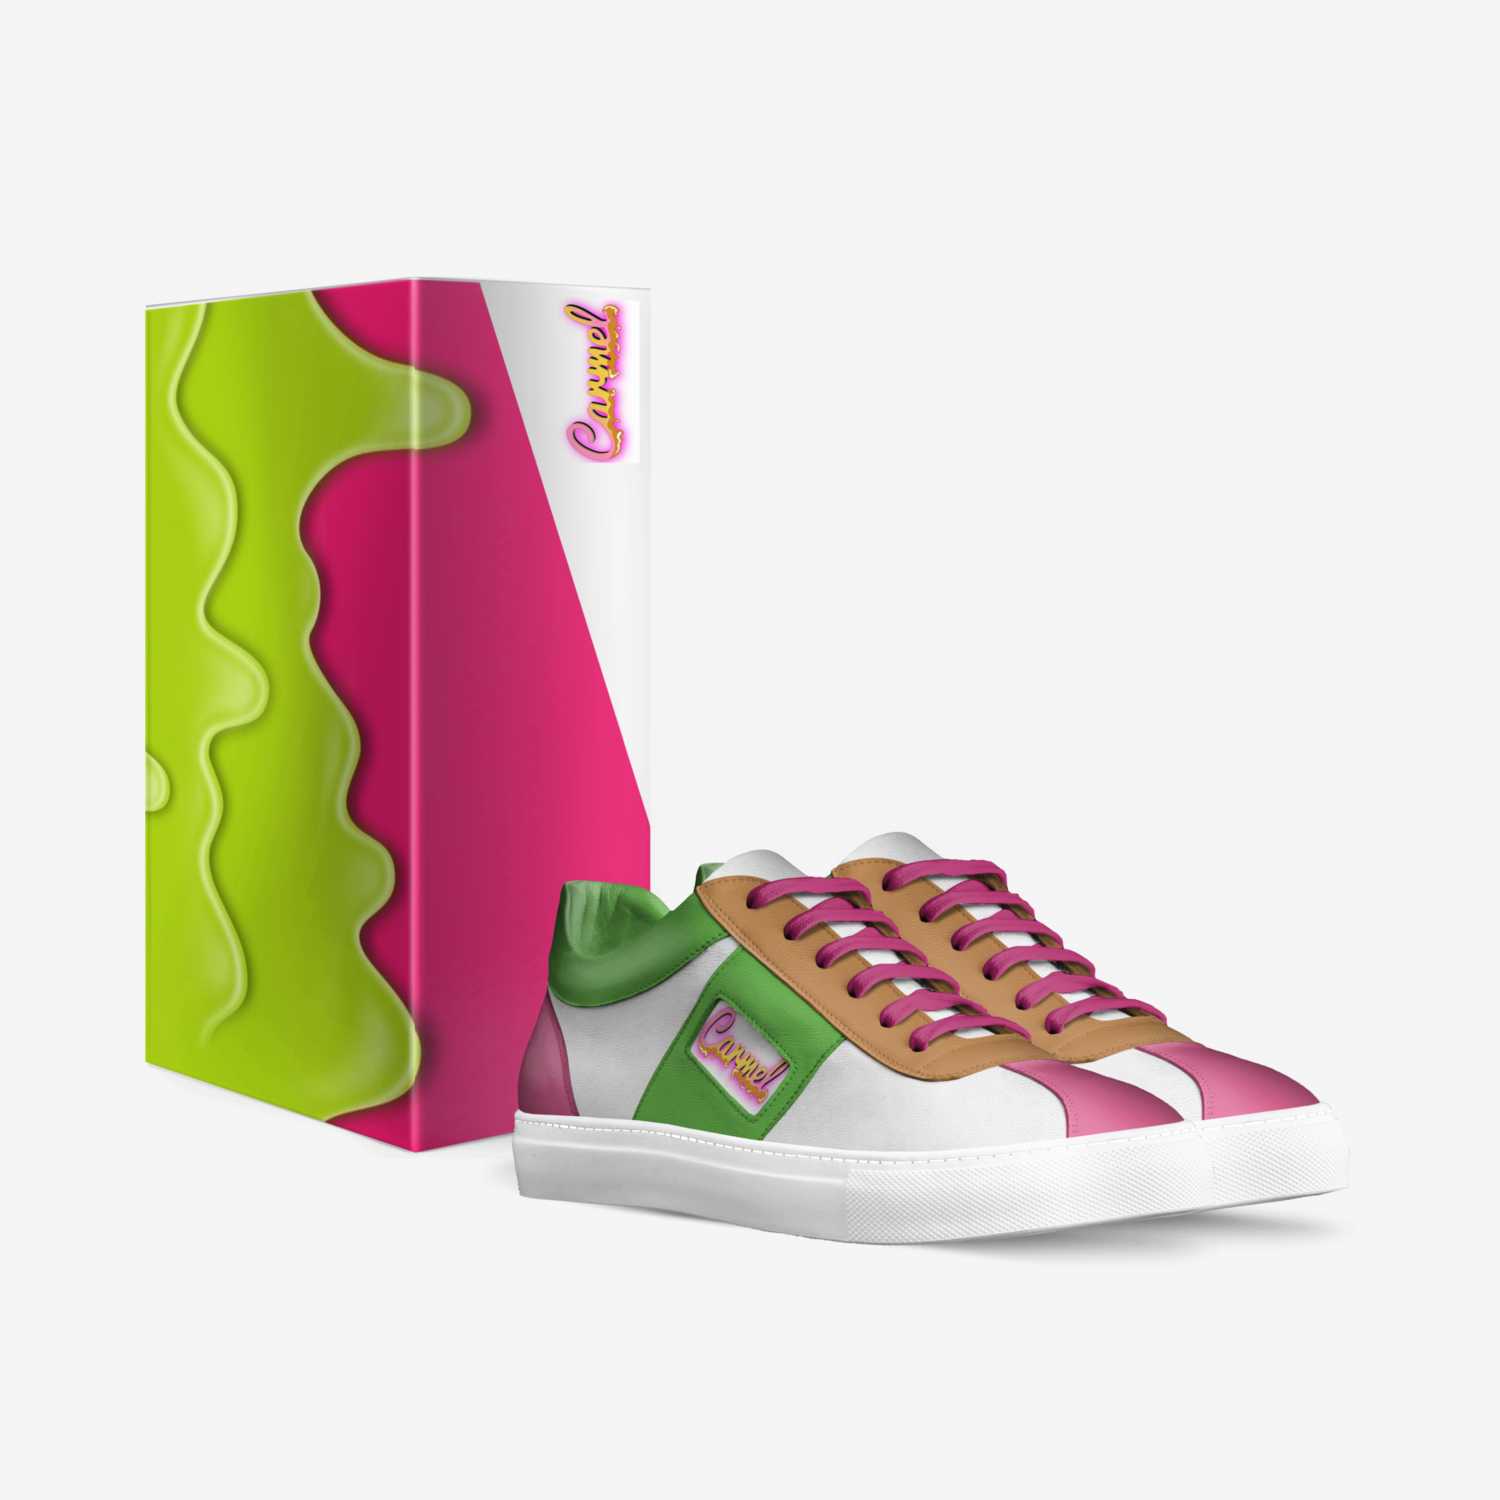 Carmel Giraffes  custom made in Italy shoes by Reginald Lee Jr | Box view